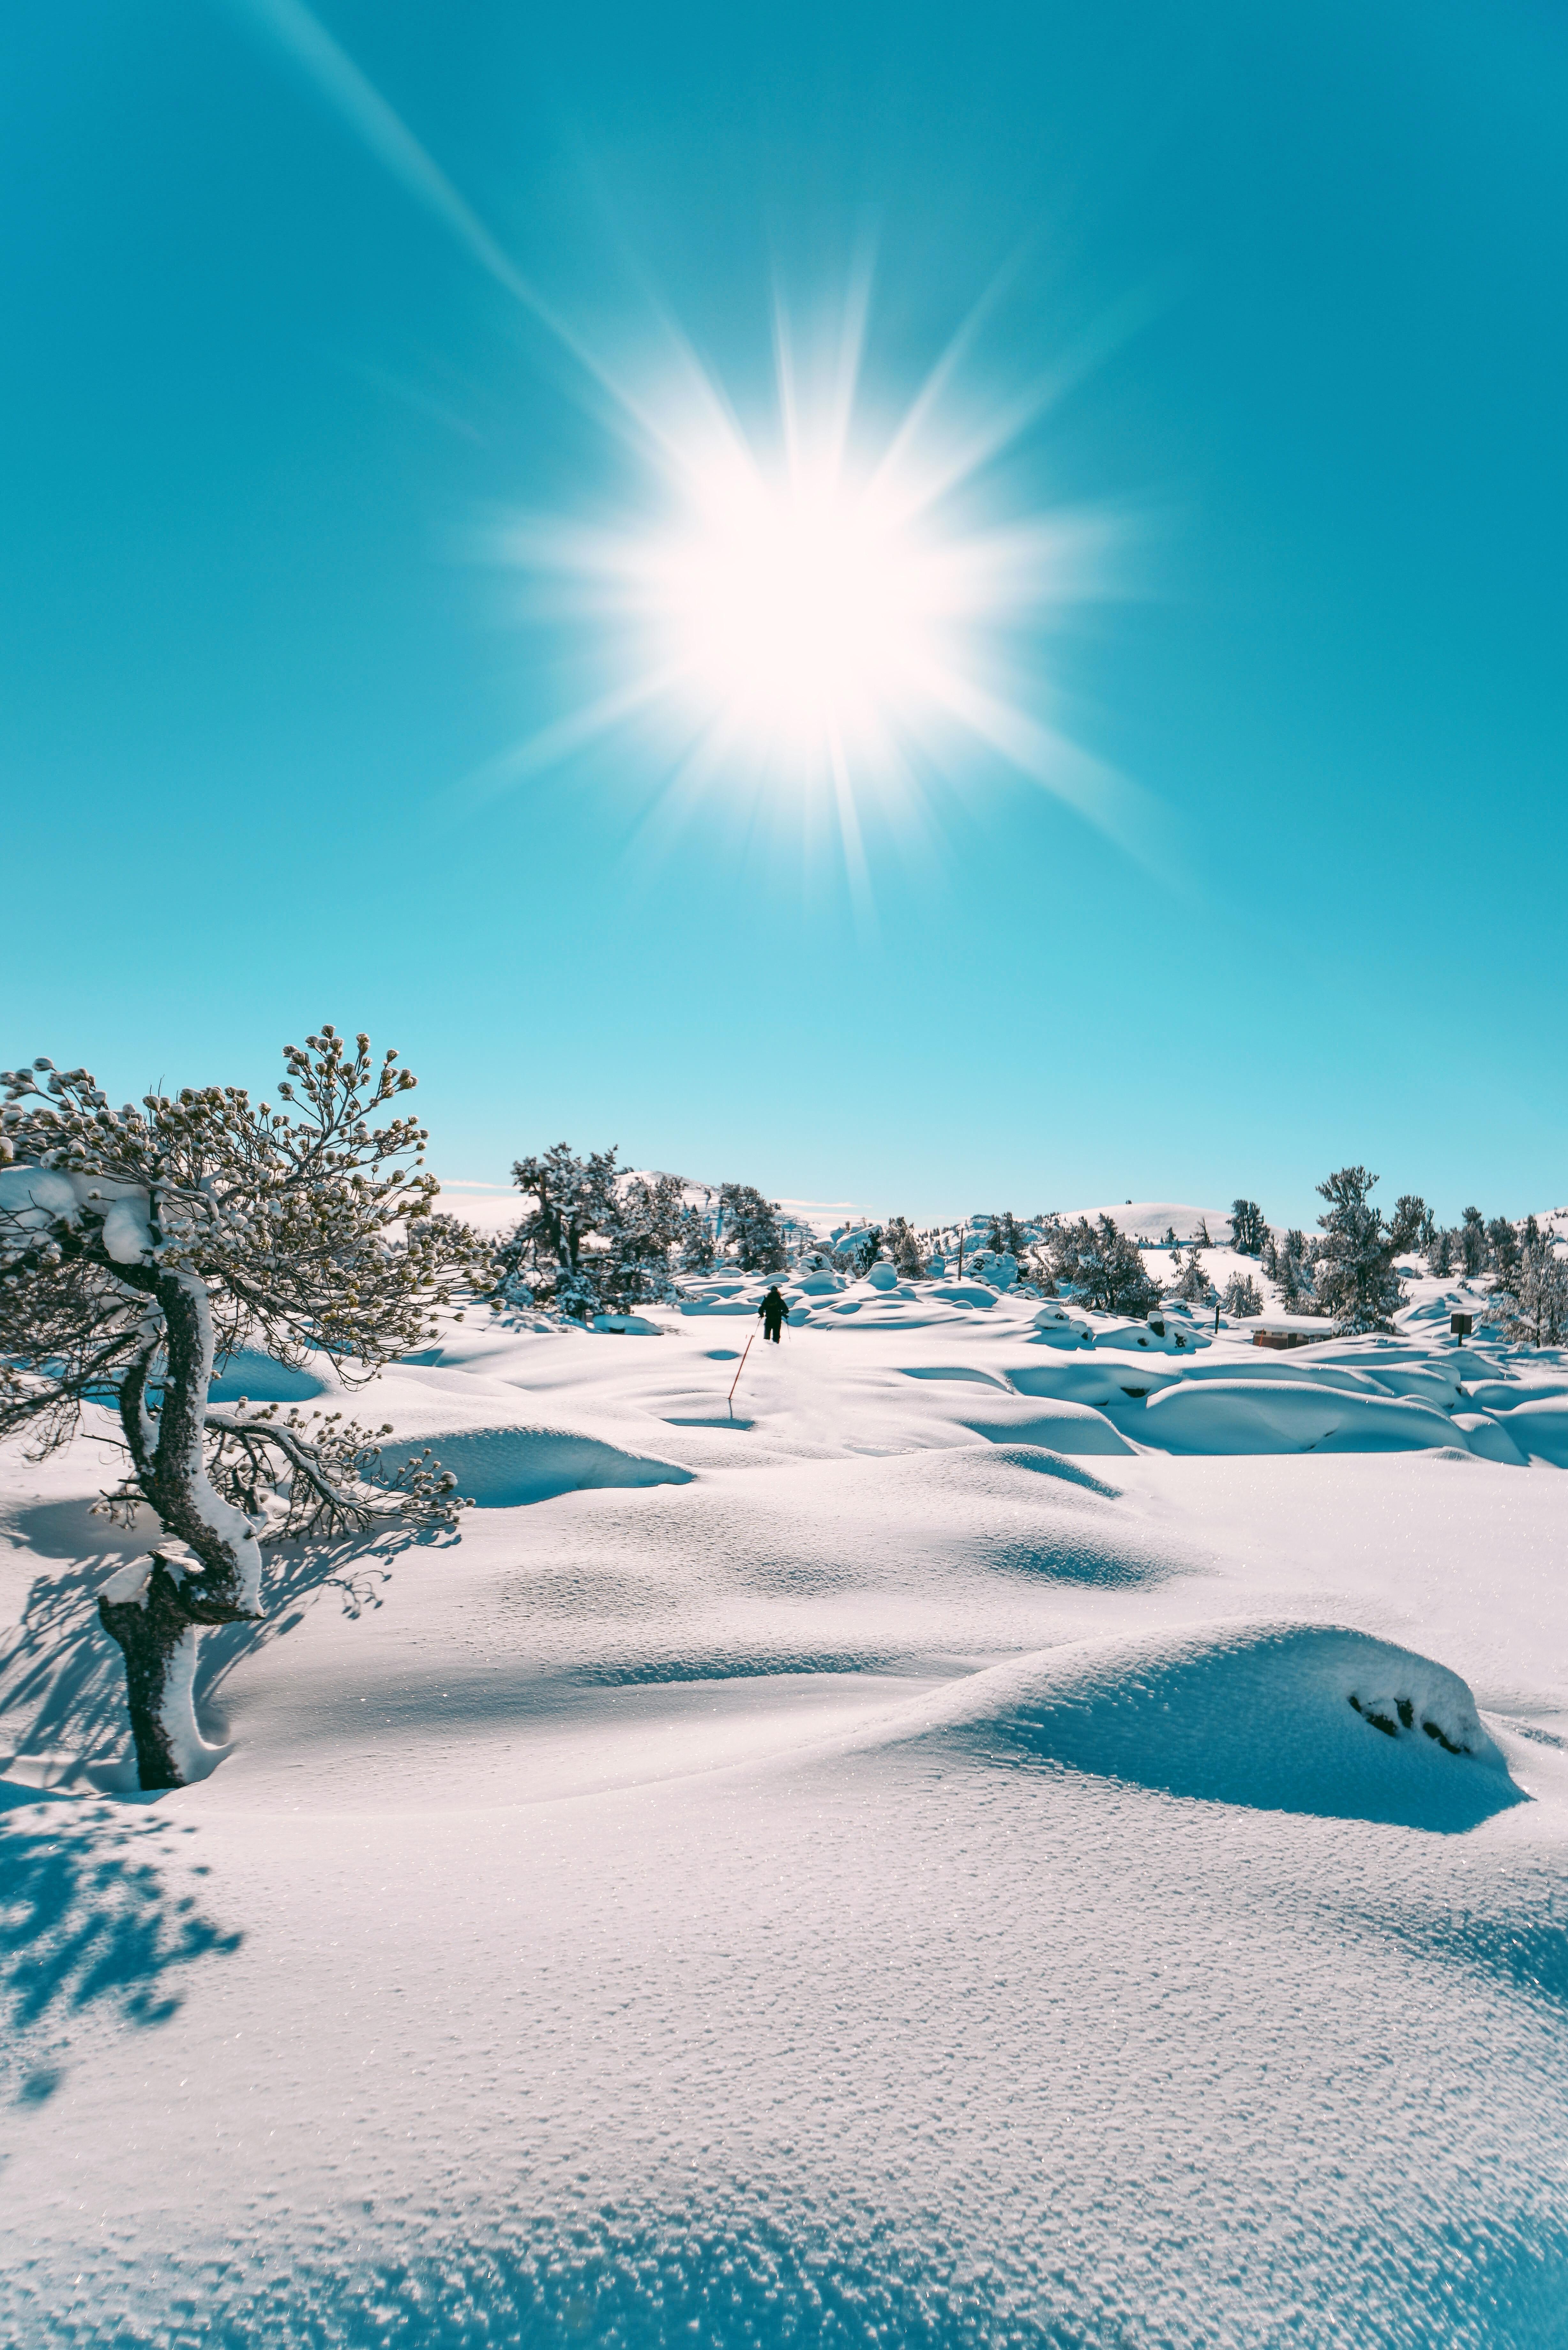 Красивые зимние картинки на телефон - 70 фото